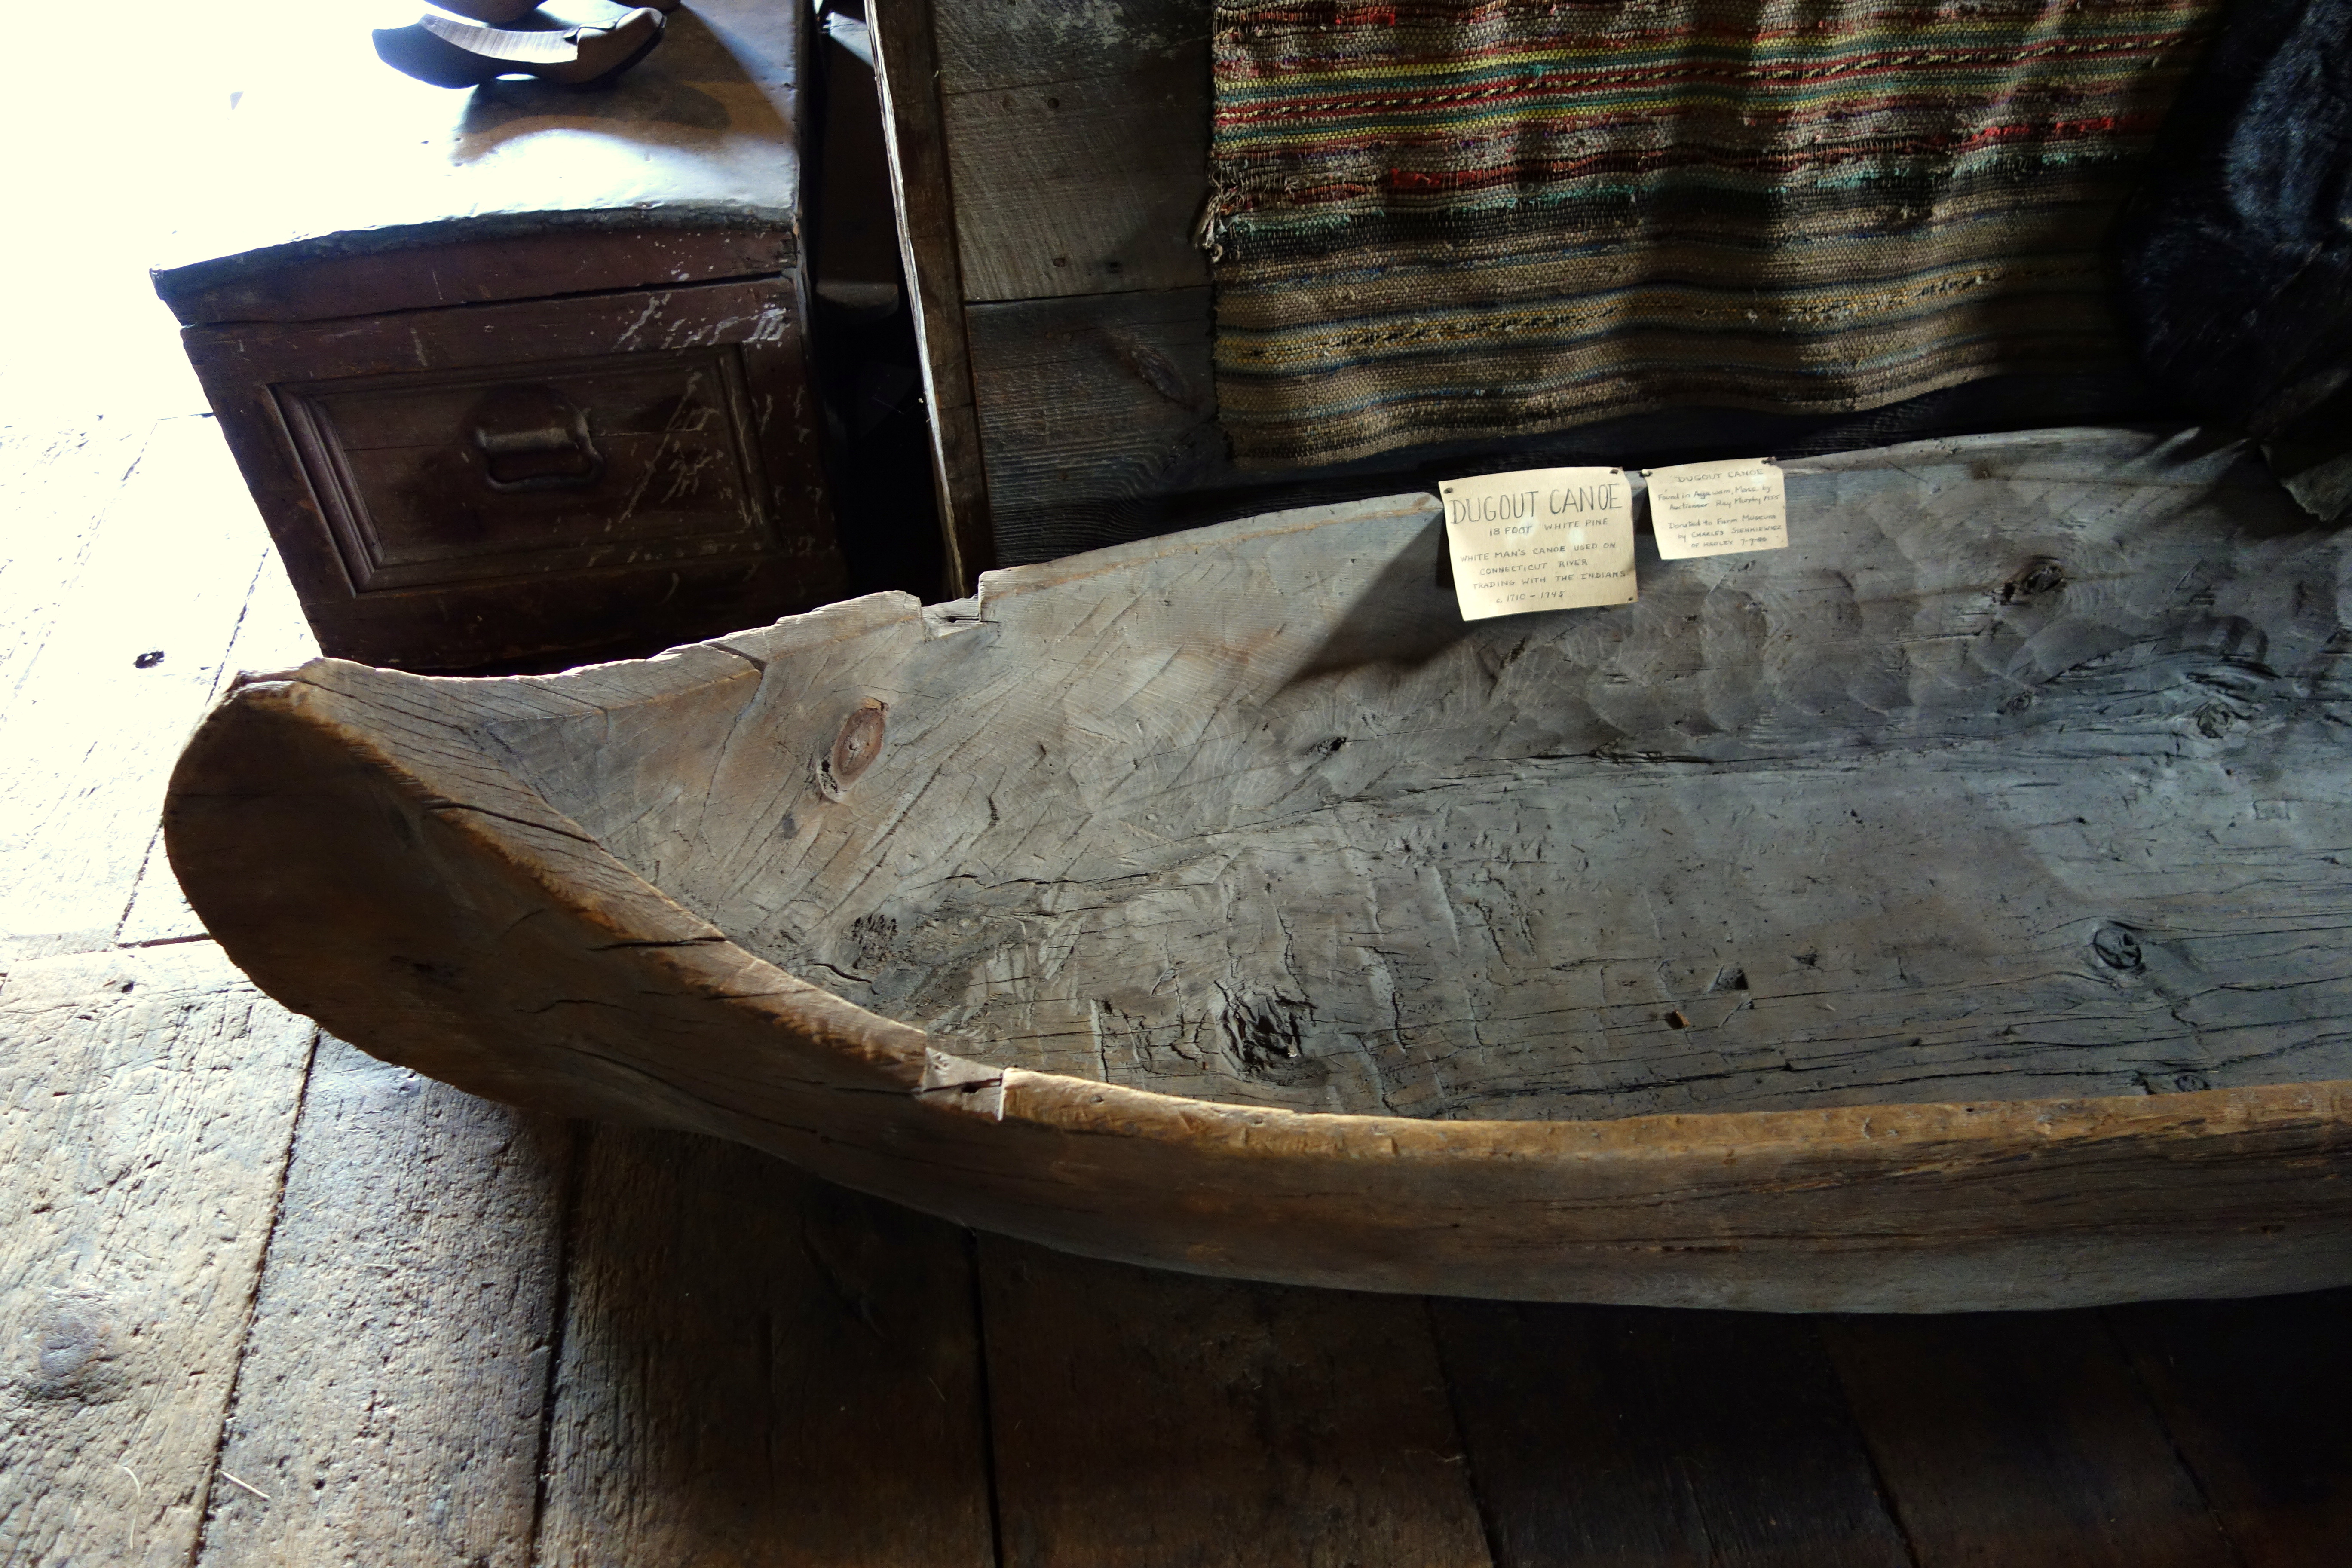 file:dugout canoe, view 1, 18 foot white pine, white man's